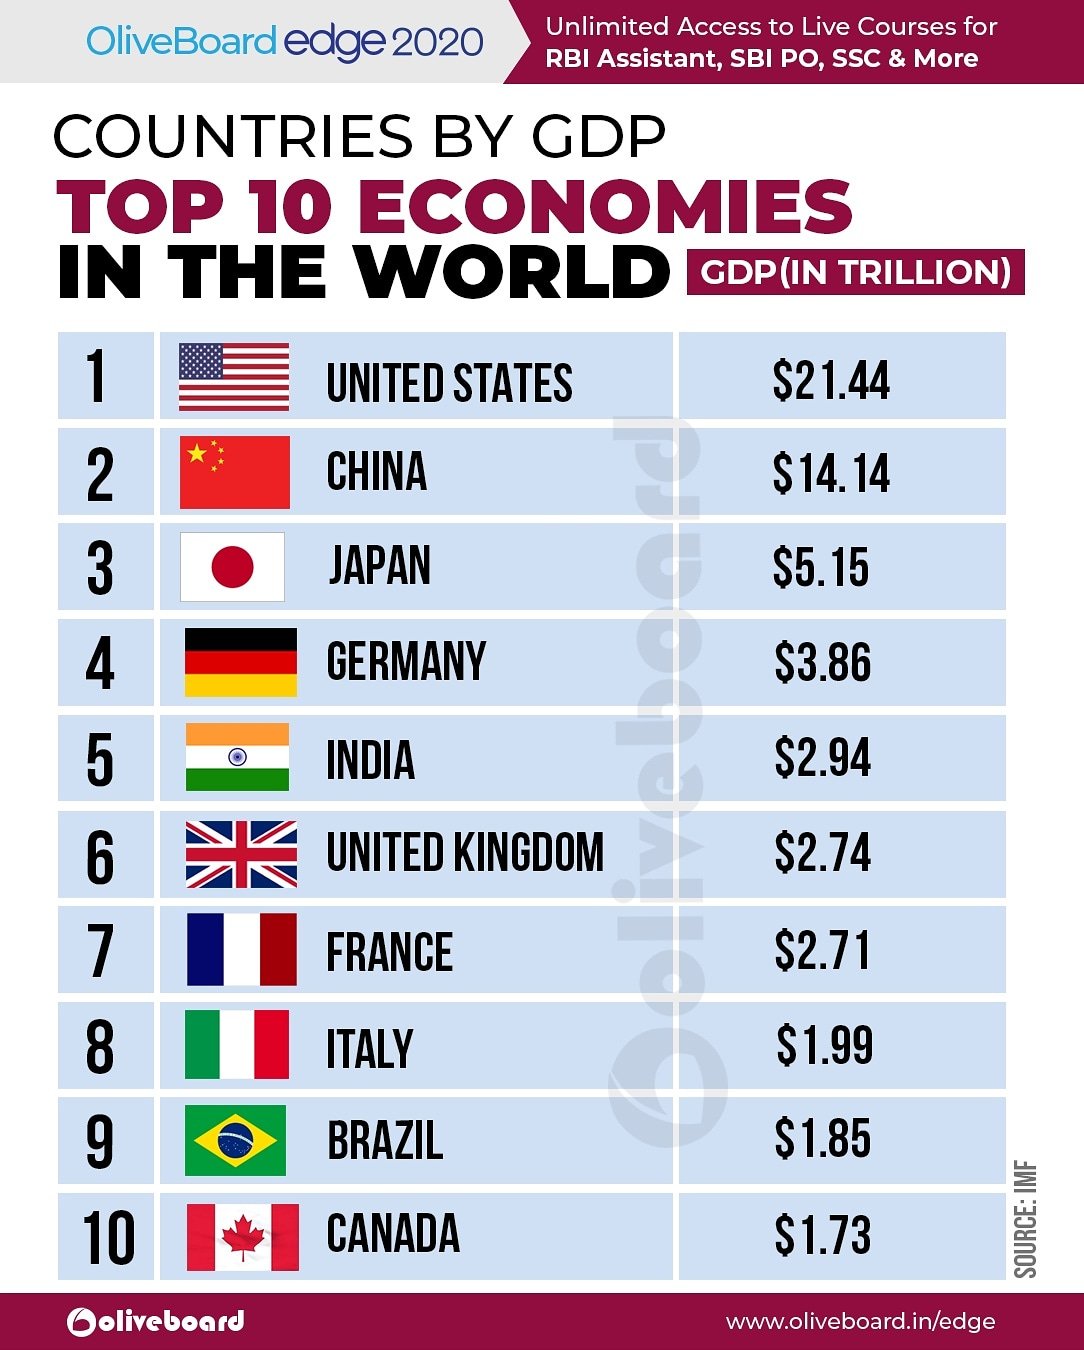 تويتر \ Oliveboard على تويتر: "Countries By GDP: Top Economies In The World Get more Free eBooks here: https://t.co/0ru4G8mwDI Take Mock Tests here: https://t.co/ViLAiOD8Rk #economies #gdp #us #india #staticgk #gk #